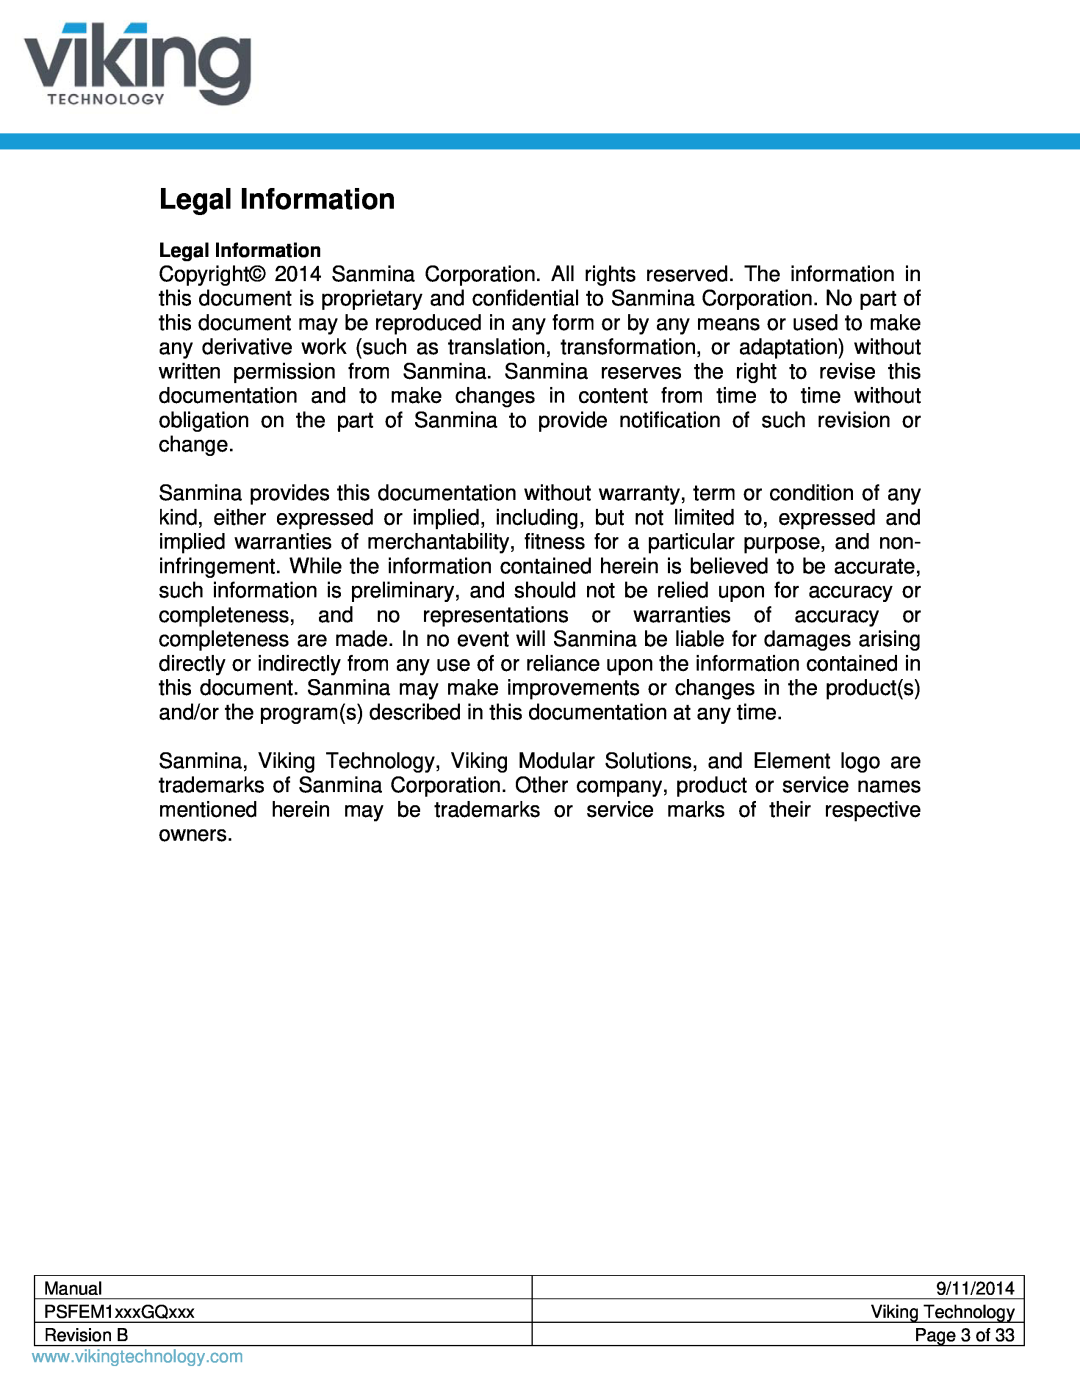 Viking PSFEM1xxxGQxxx manual Legal Information 